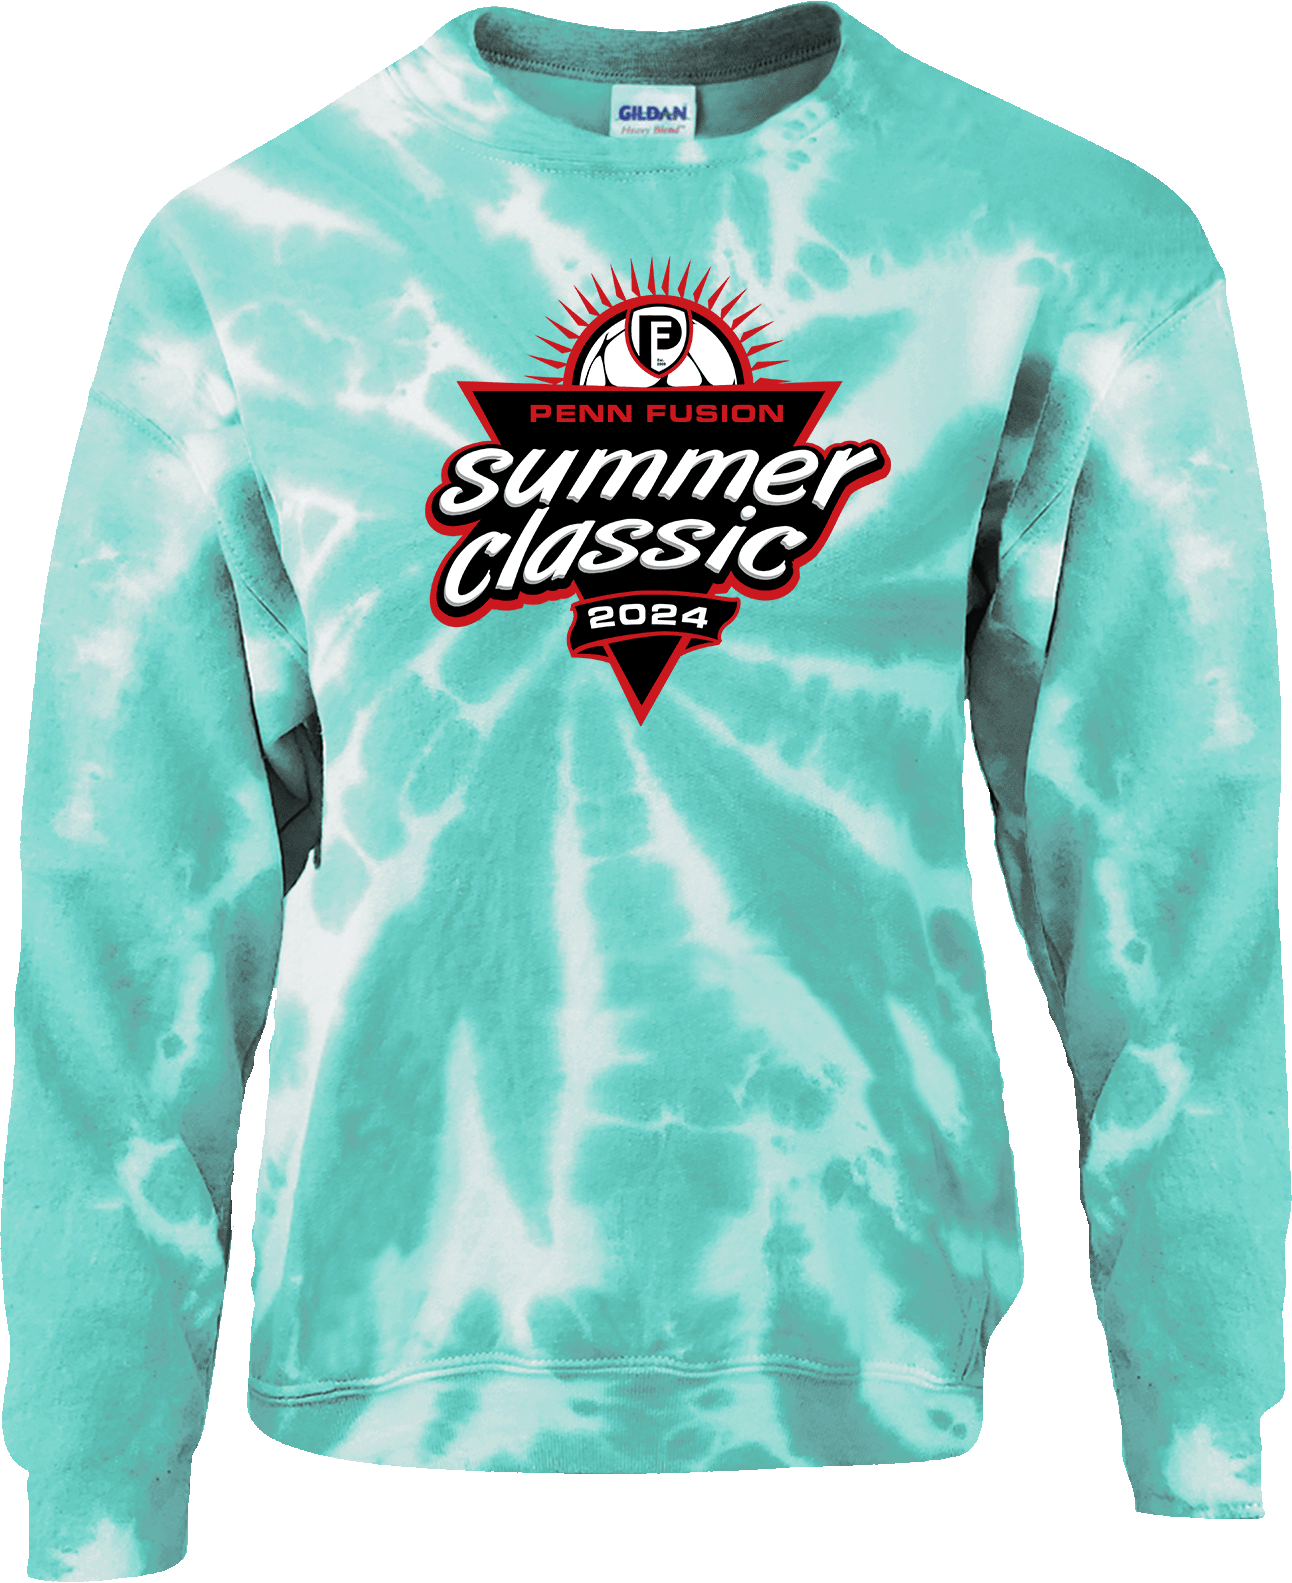 Crew Sweatershirt - 2024 Penn Fusion Summer Classic